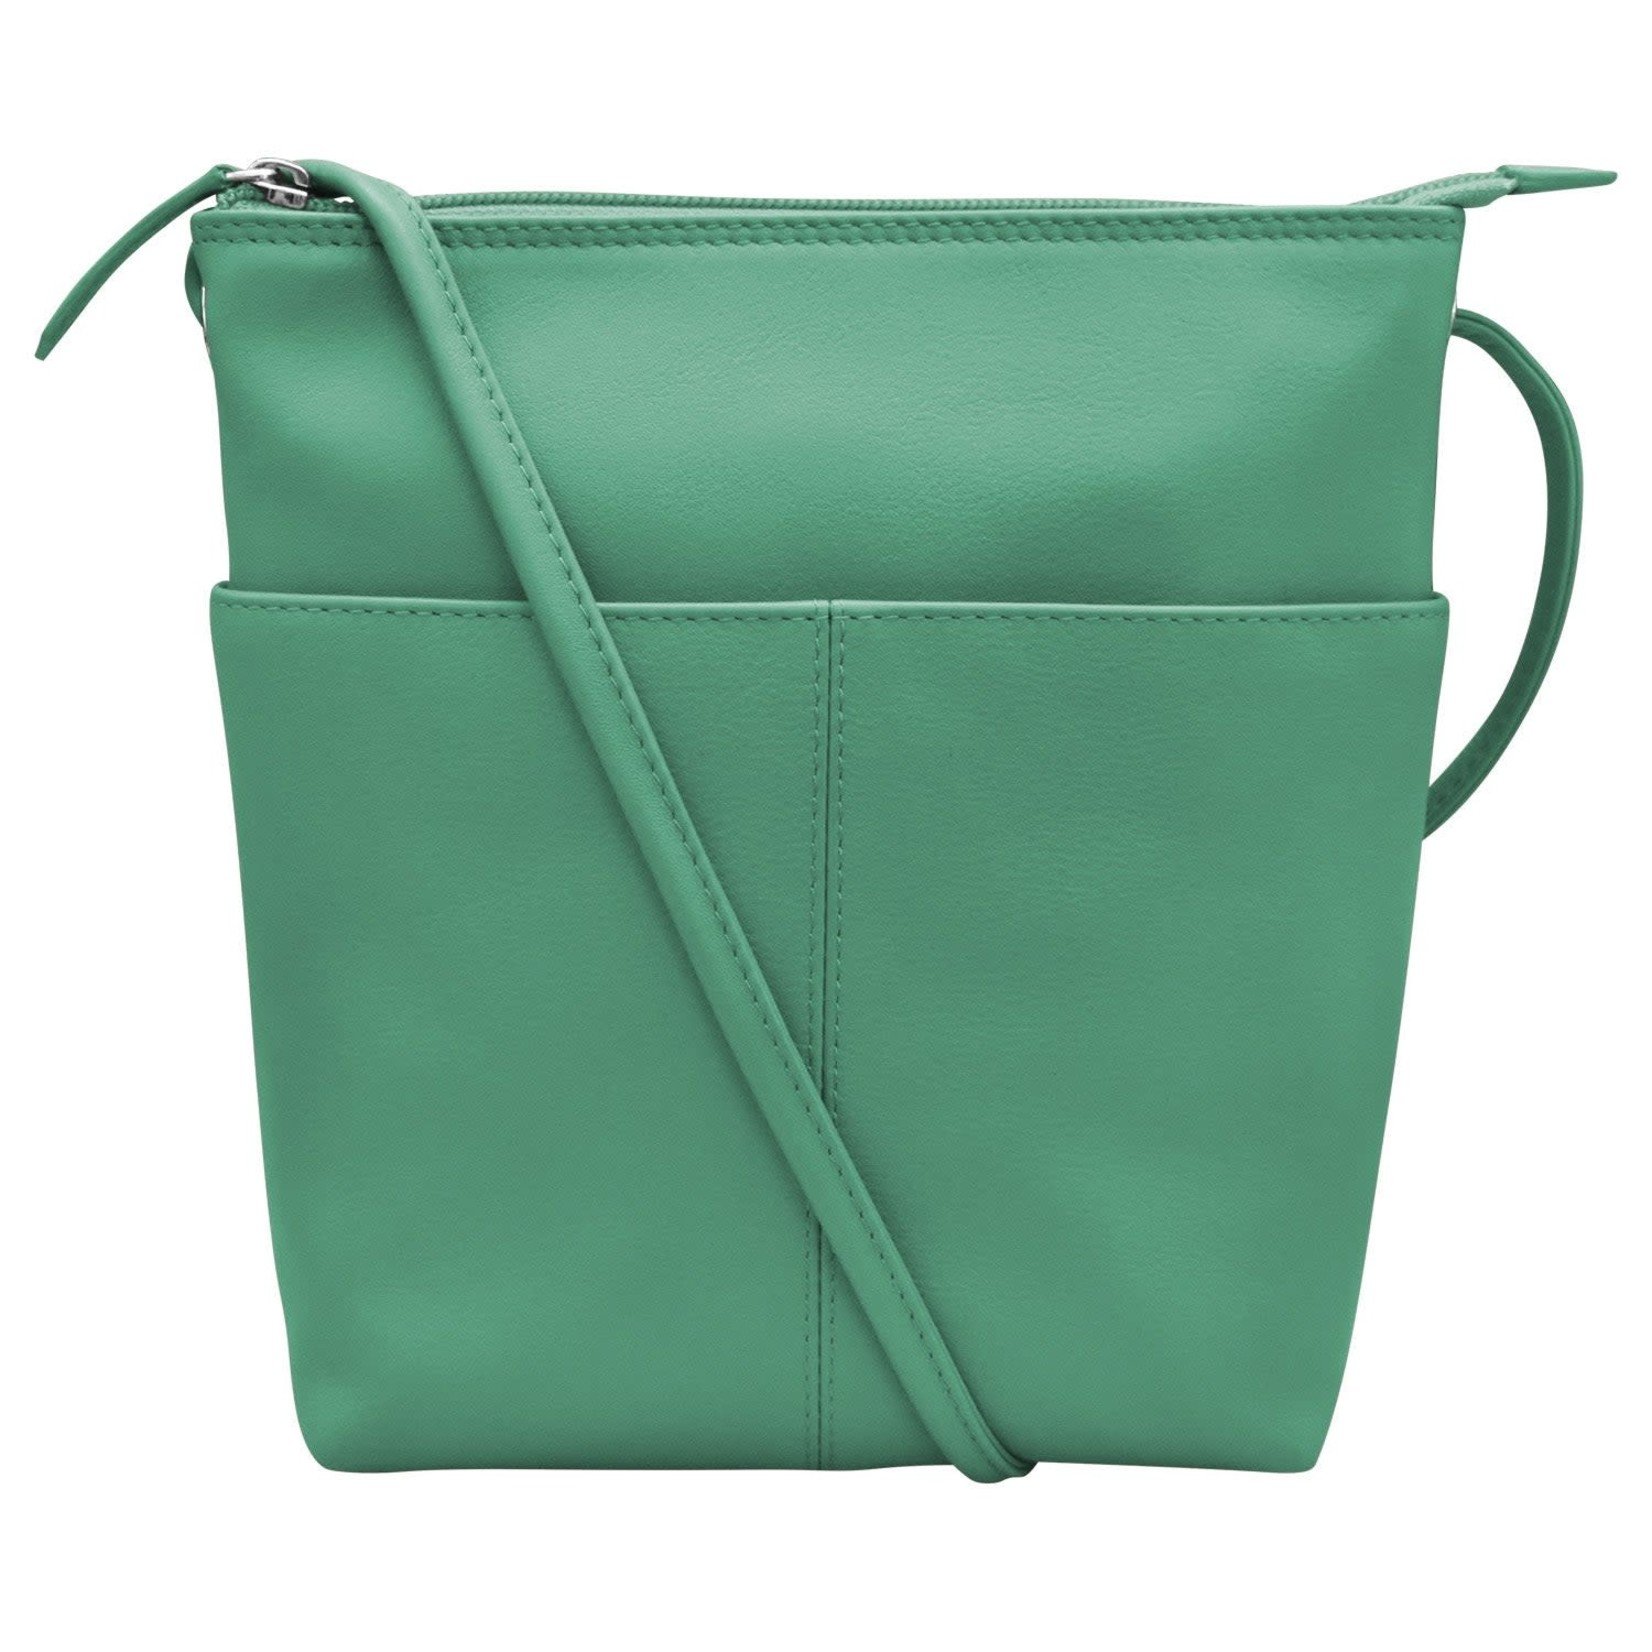 Leather Handbags and Accessories 6661 Turquoise - Midi Sac